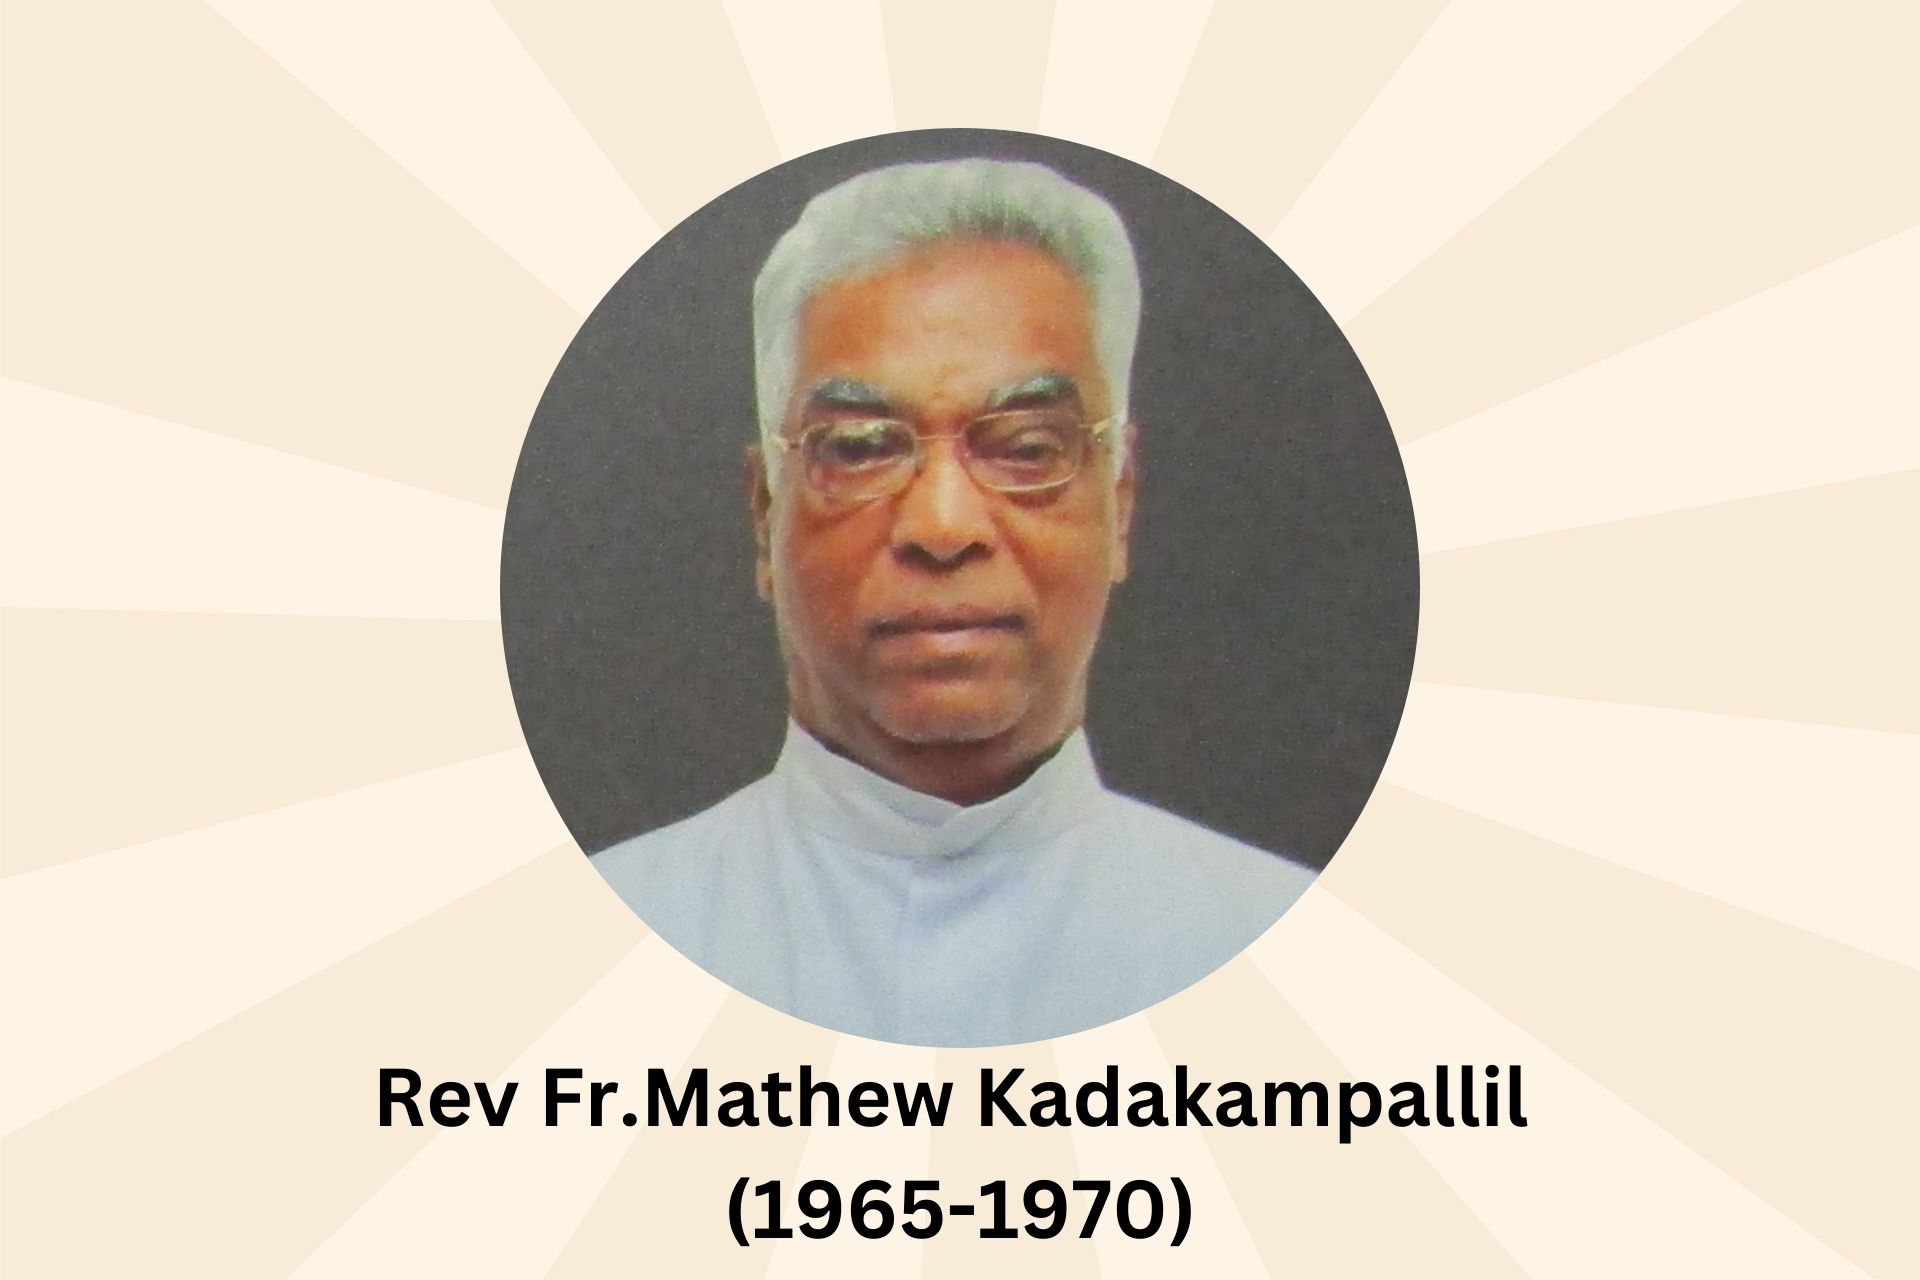 Rev Fr.Mathew Kadakampallil (1965-1970)